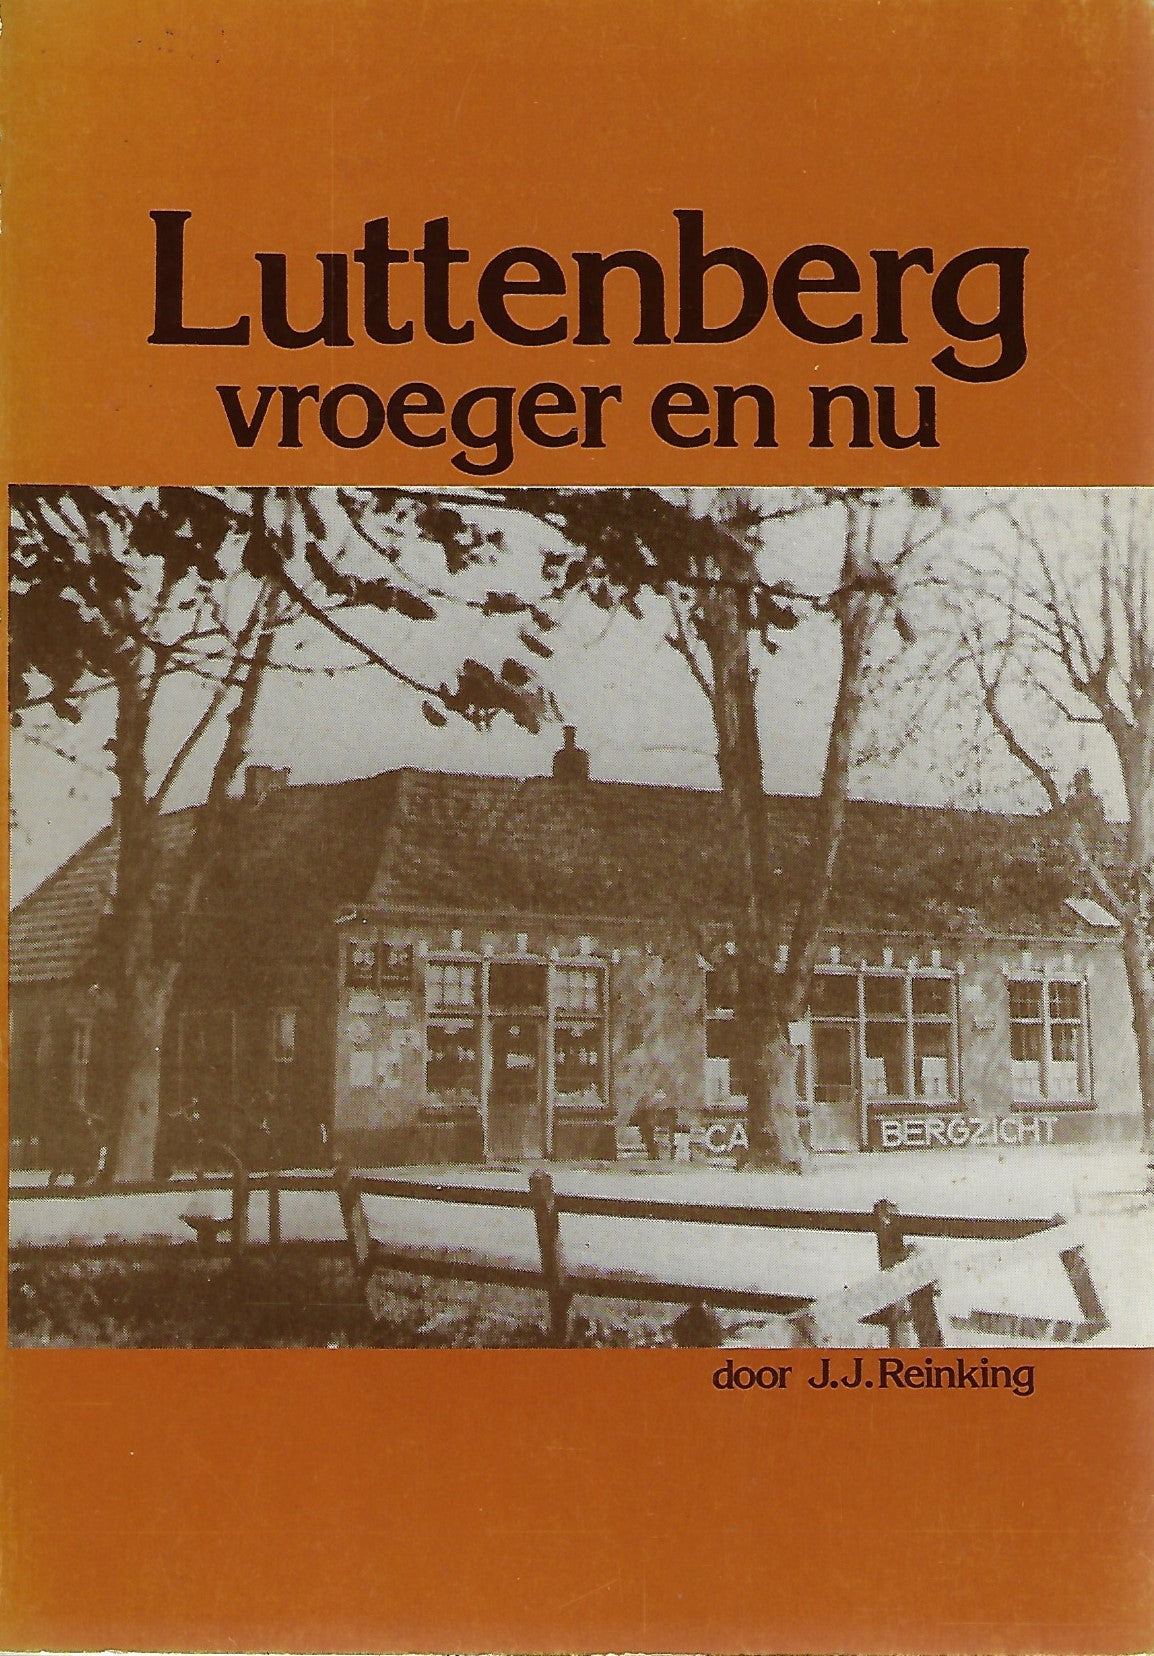 Luttenberg vroeger en nu